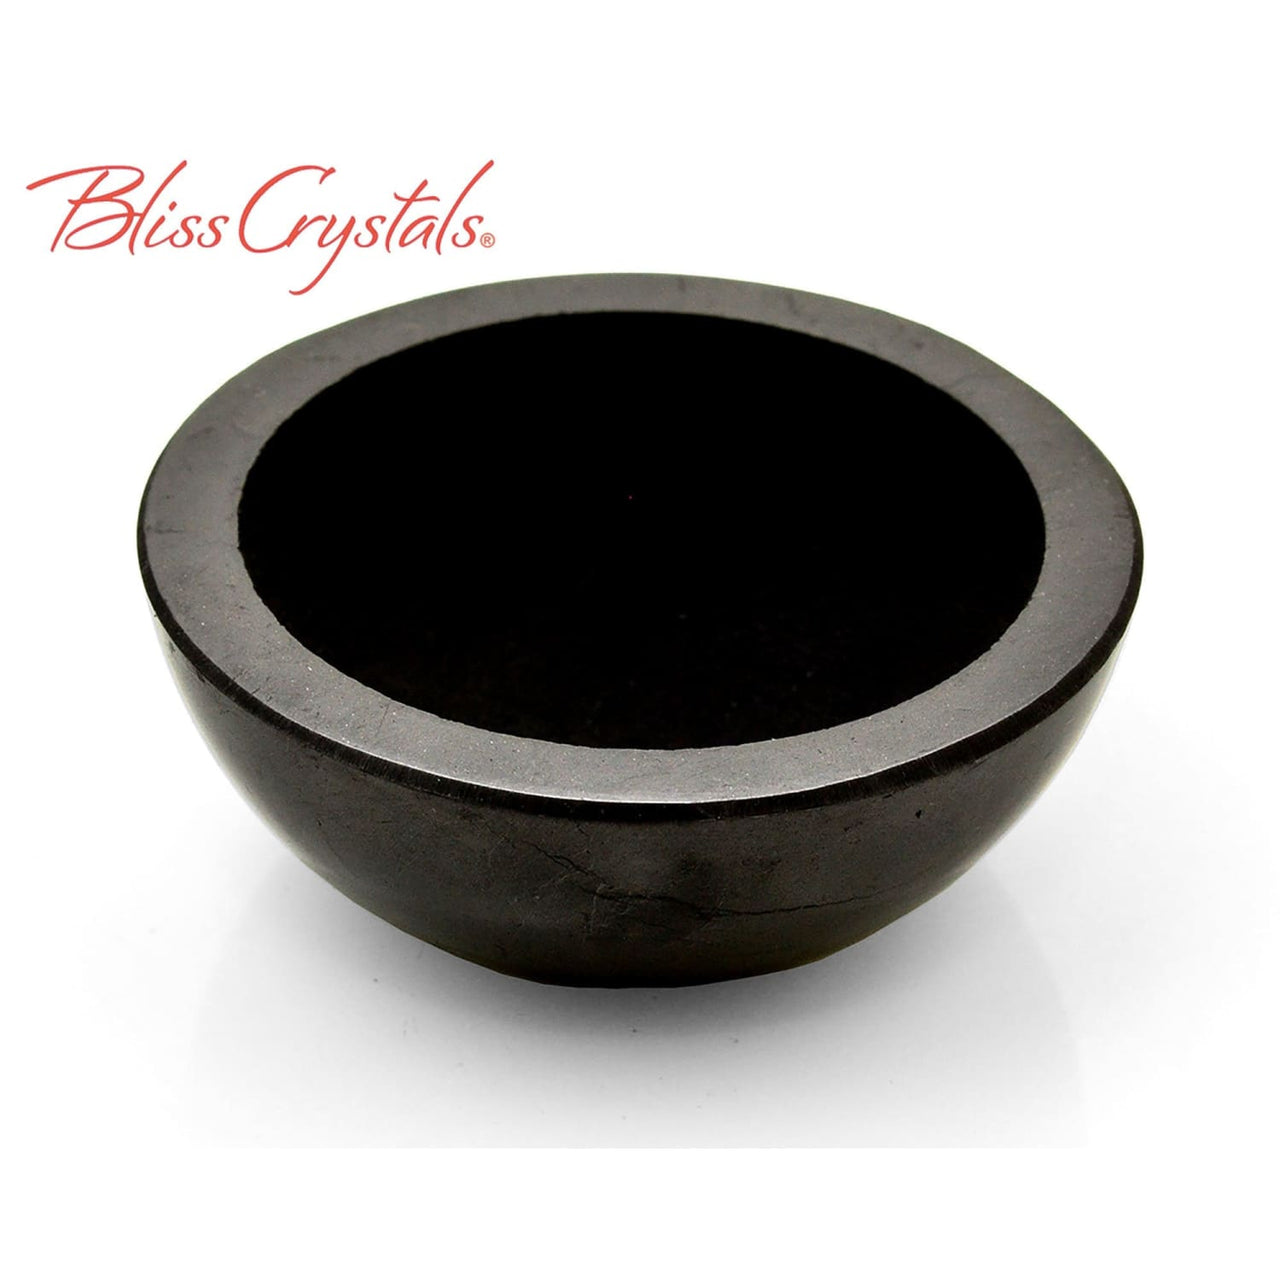 1 SHUNGITE Small Round Bowl Polished 2 Altar Stone for 